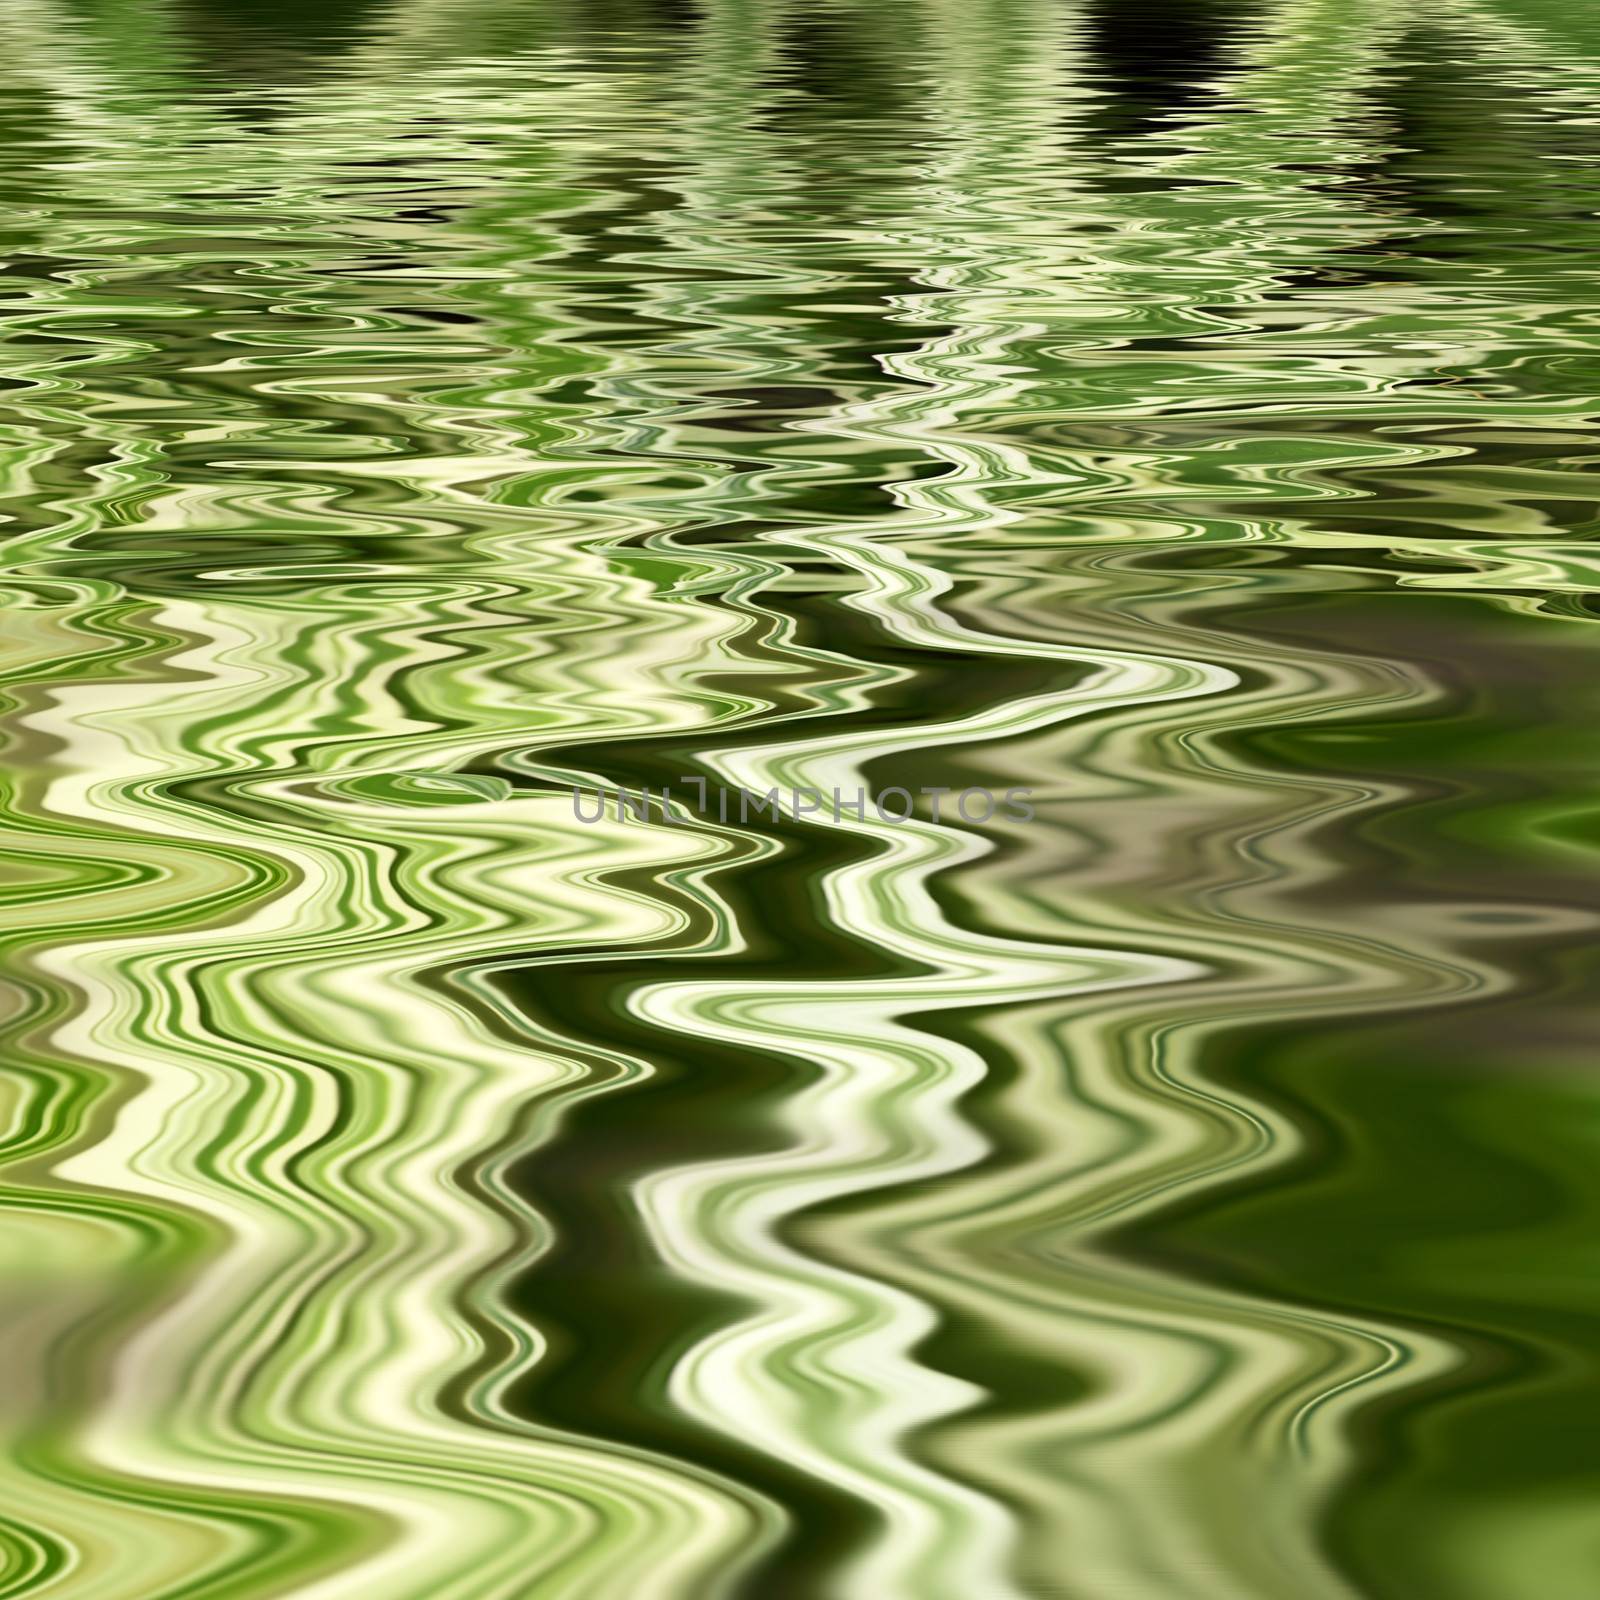 Rippling green reflections by Farina6000